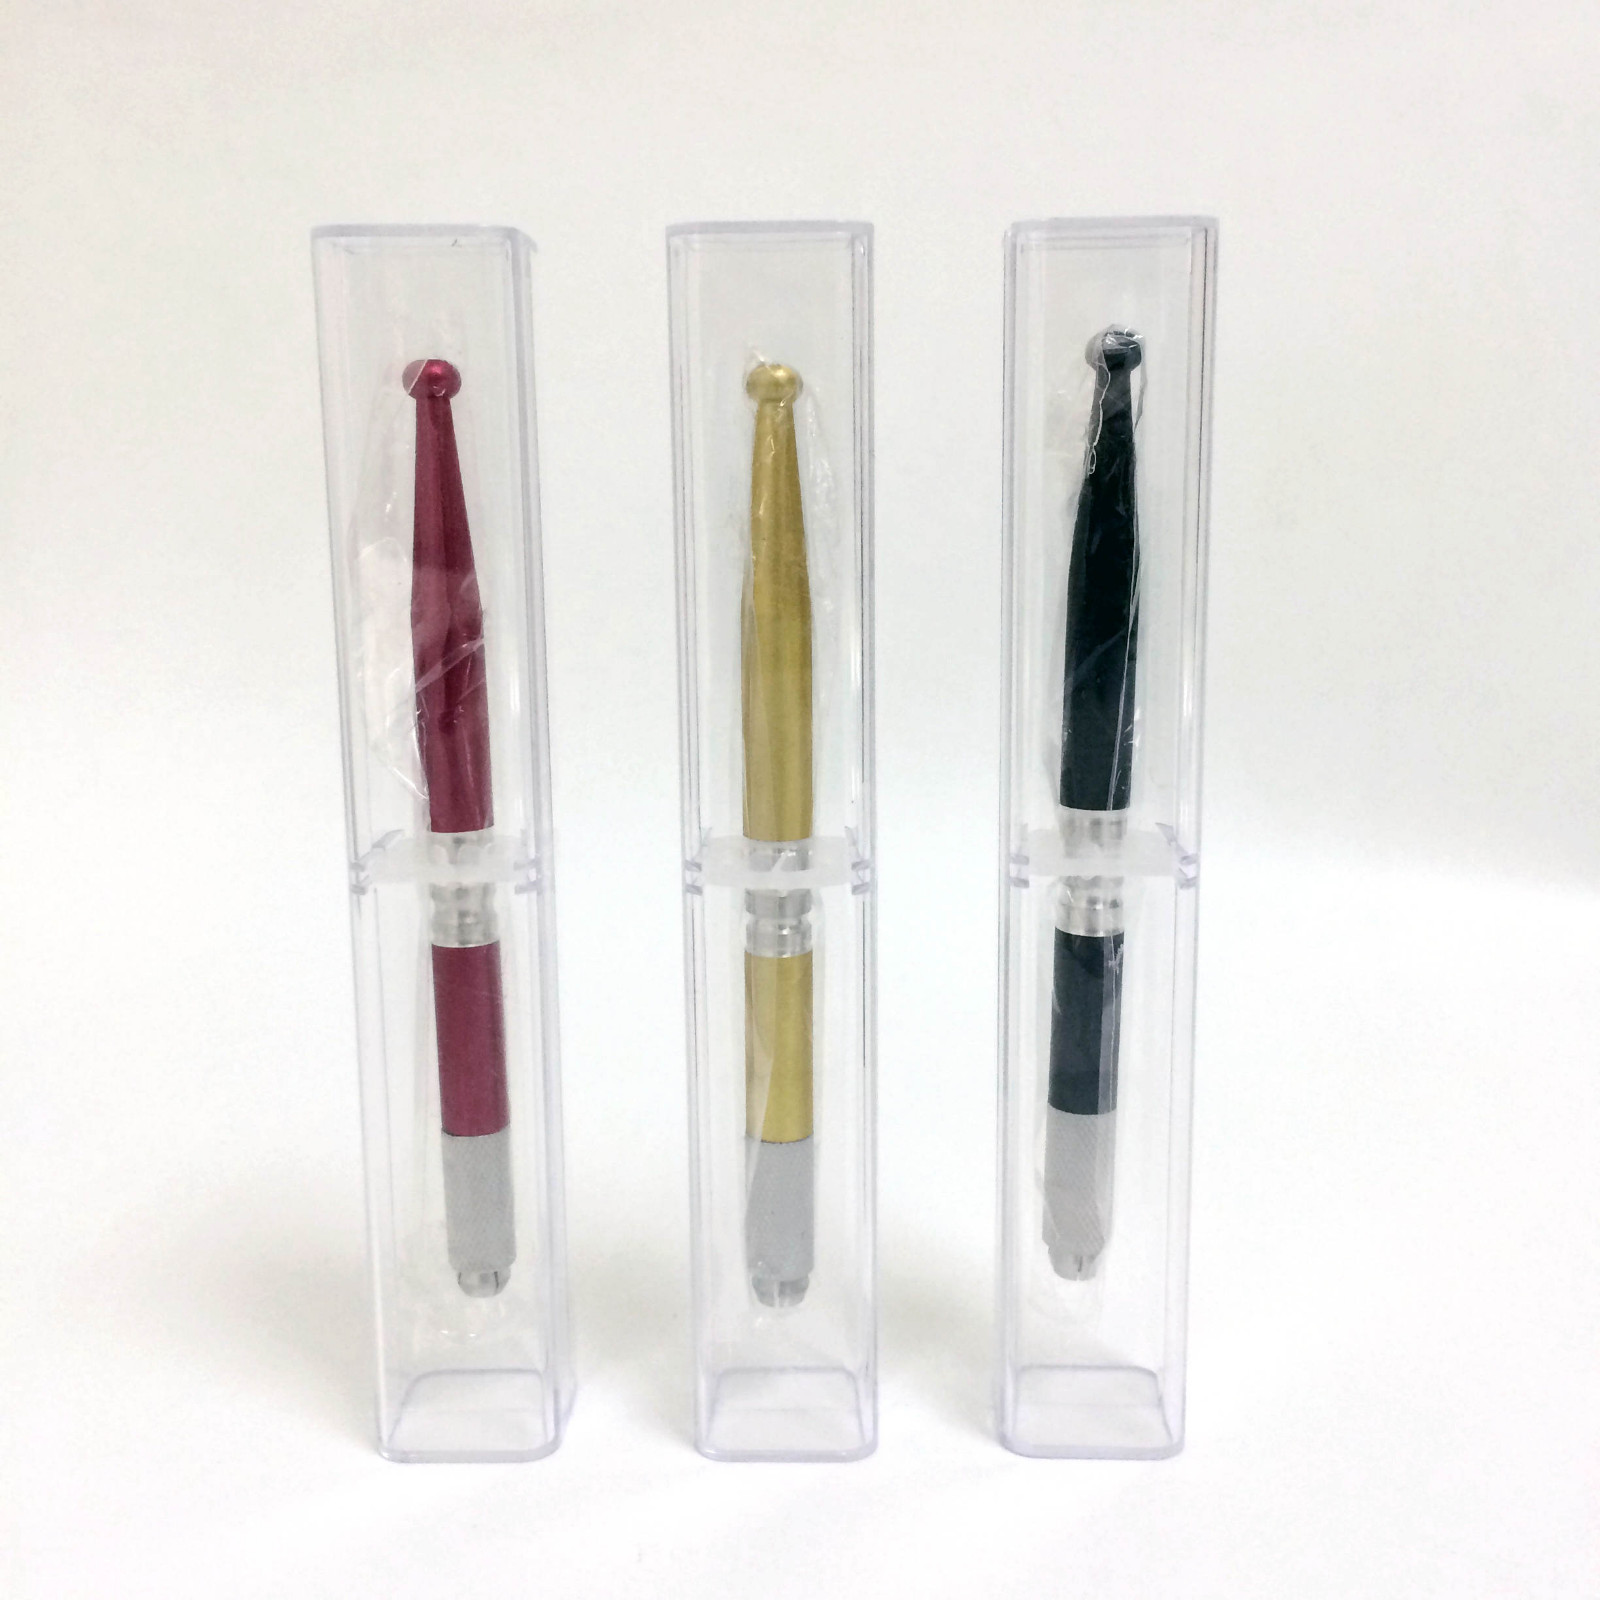 BoLin-Eyebrow Tattoo Pen Manufacturer Colorful Microblading Manual Pen-3